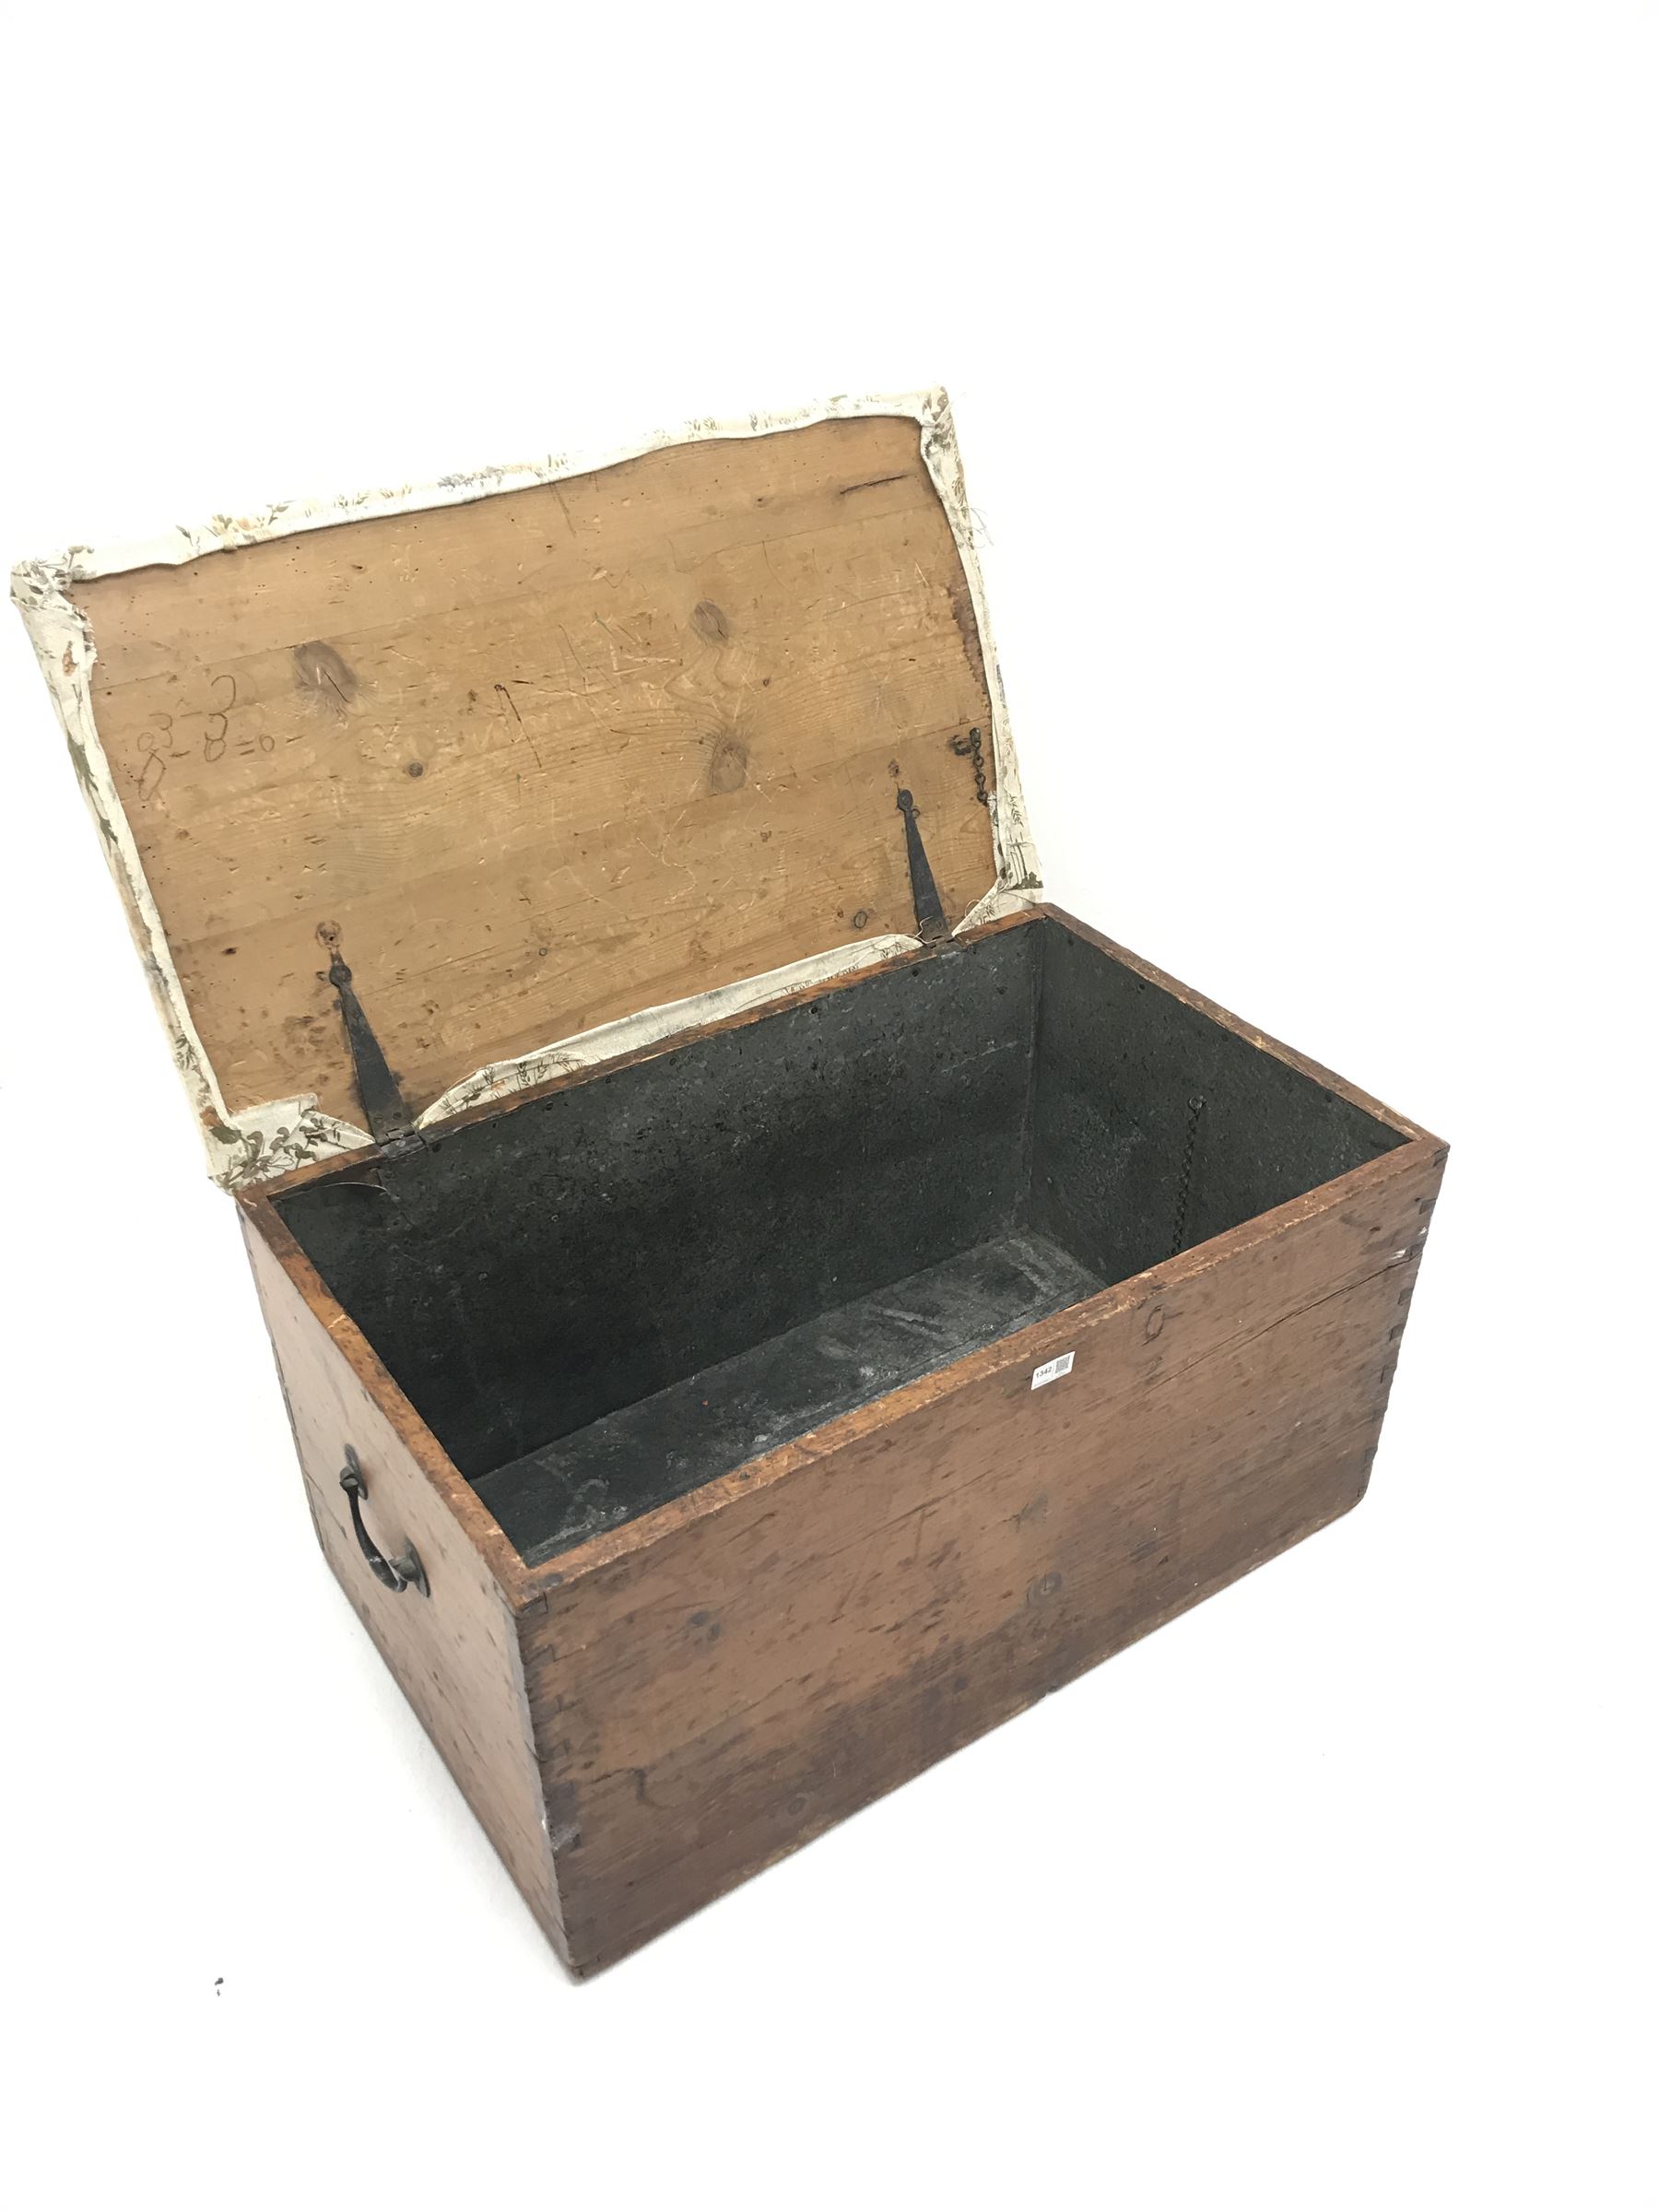 19th century pine blanket box - Image 3 of 3